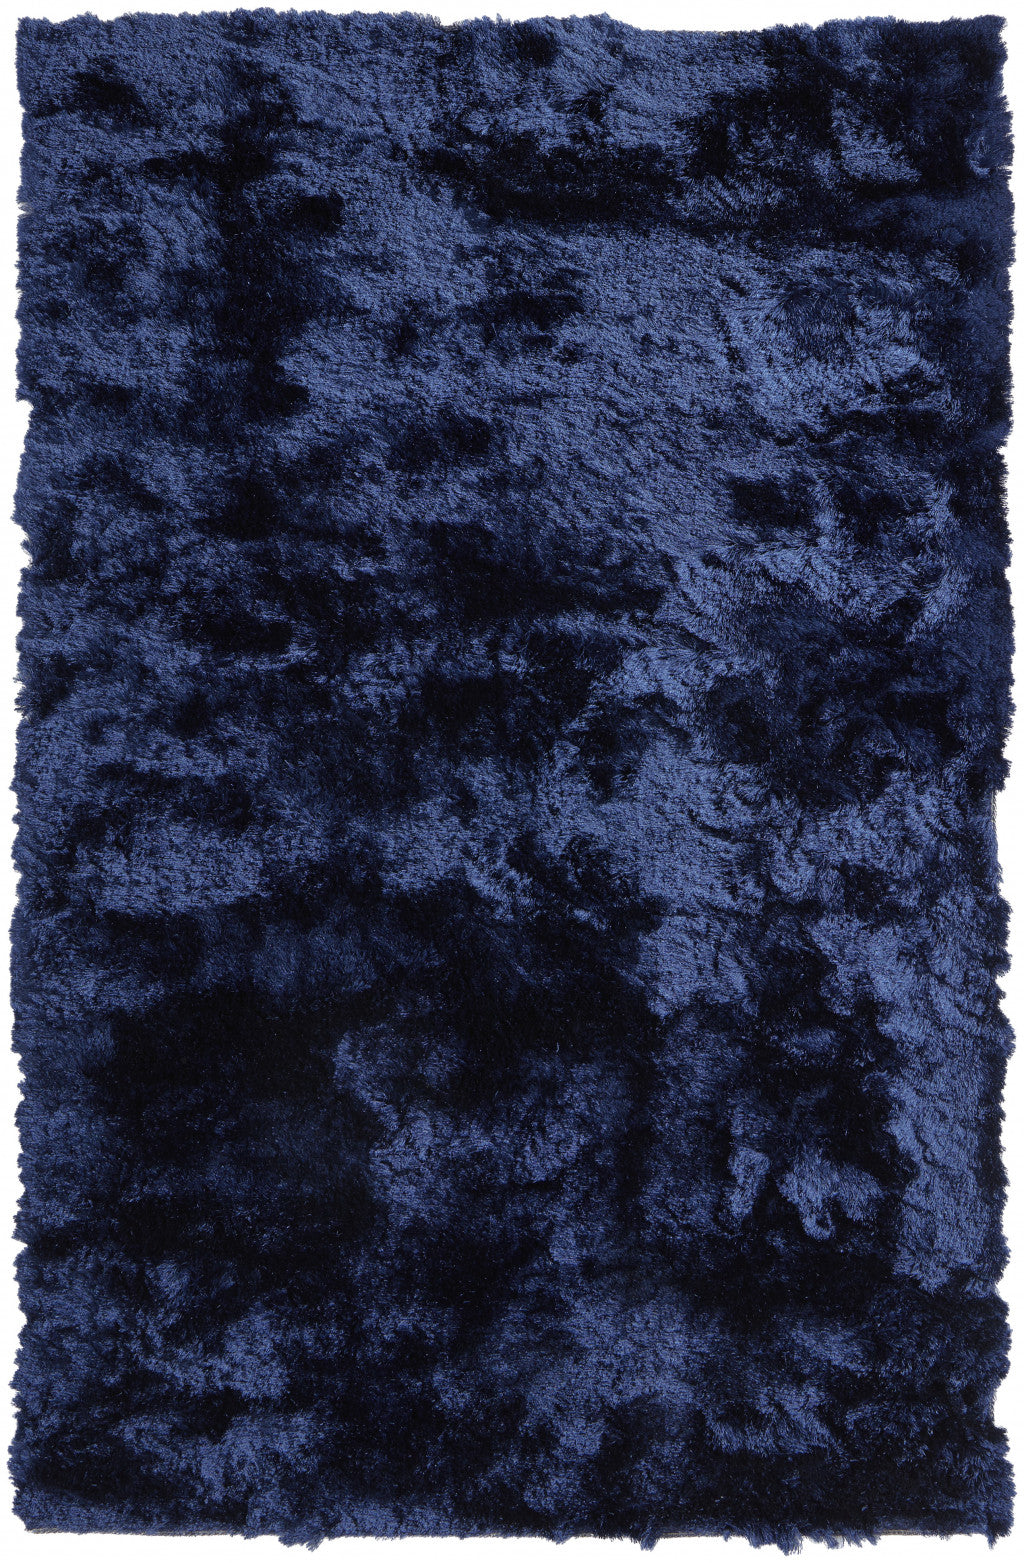 2' X 3' Blue And Black Shag Tufted Handmade Area Rug